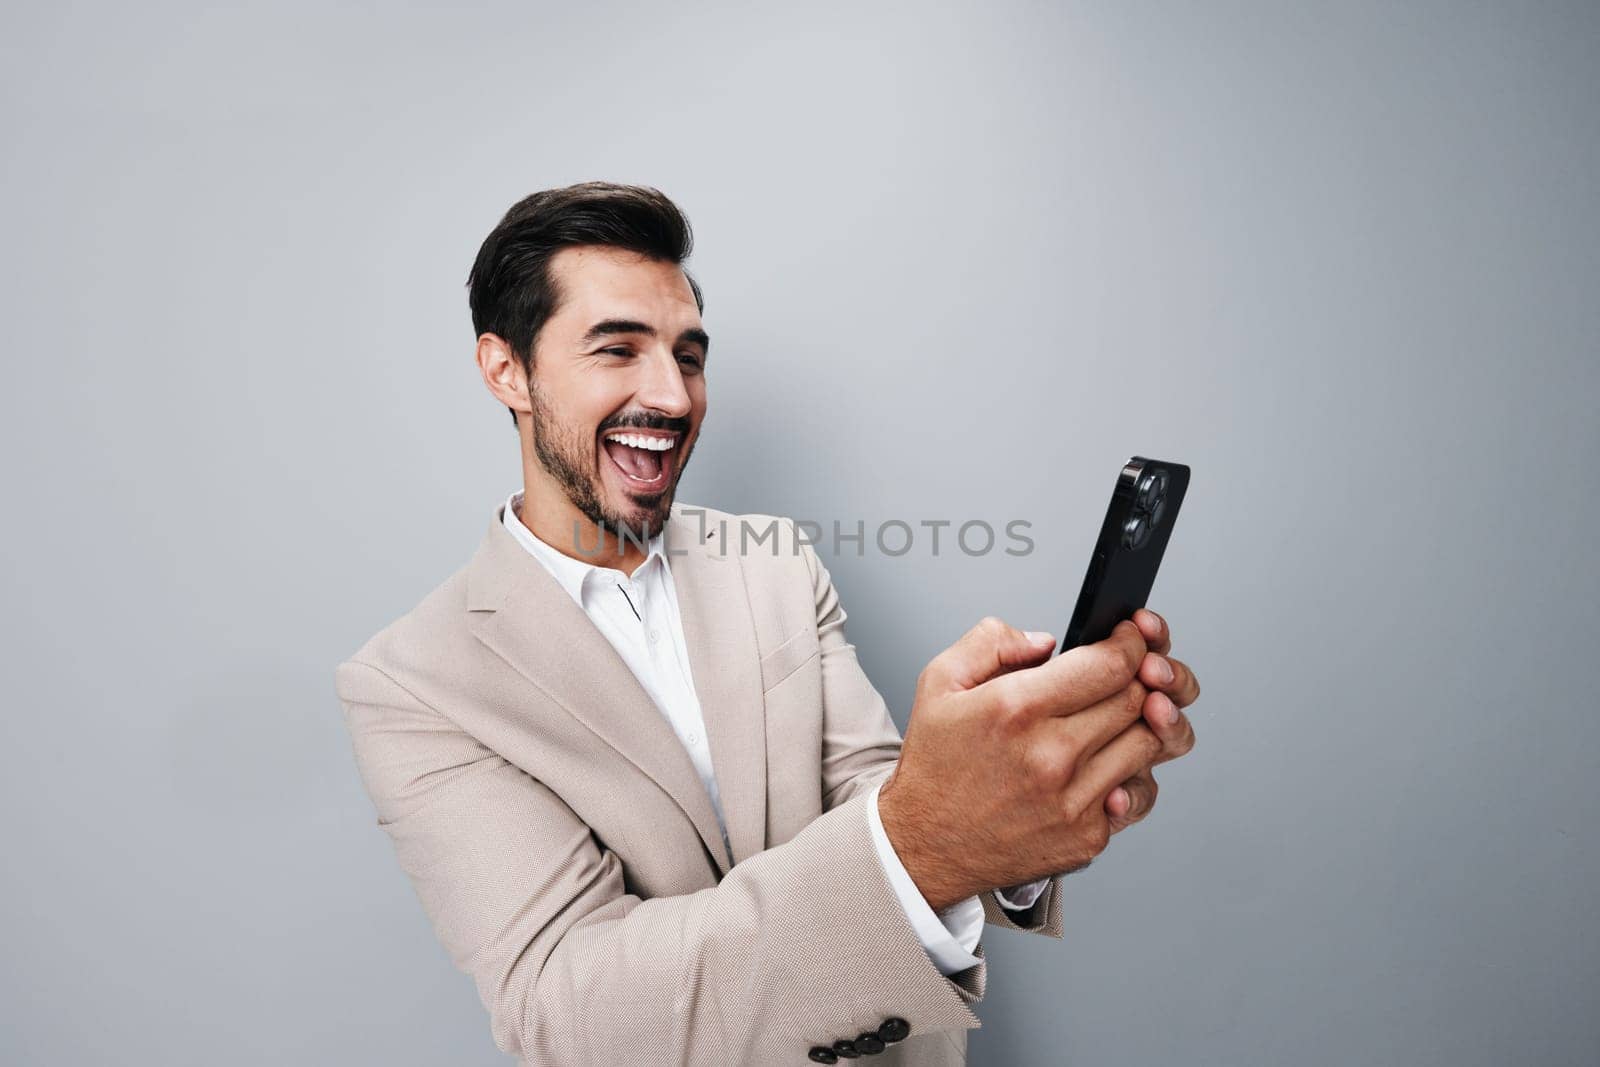 man studio phone suit portrait blogger call entrepreneur happy corporate success cellphone hold smile adult male business smartphone selfies confident beige